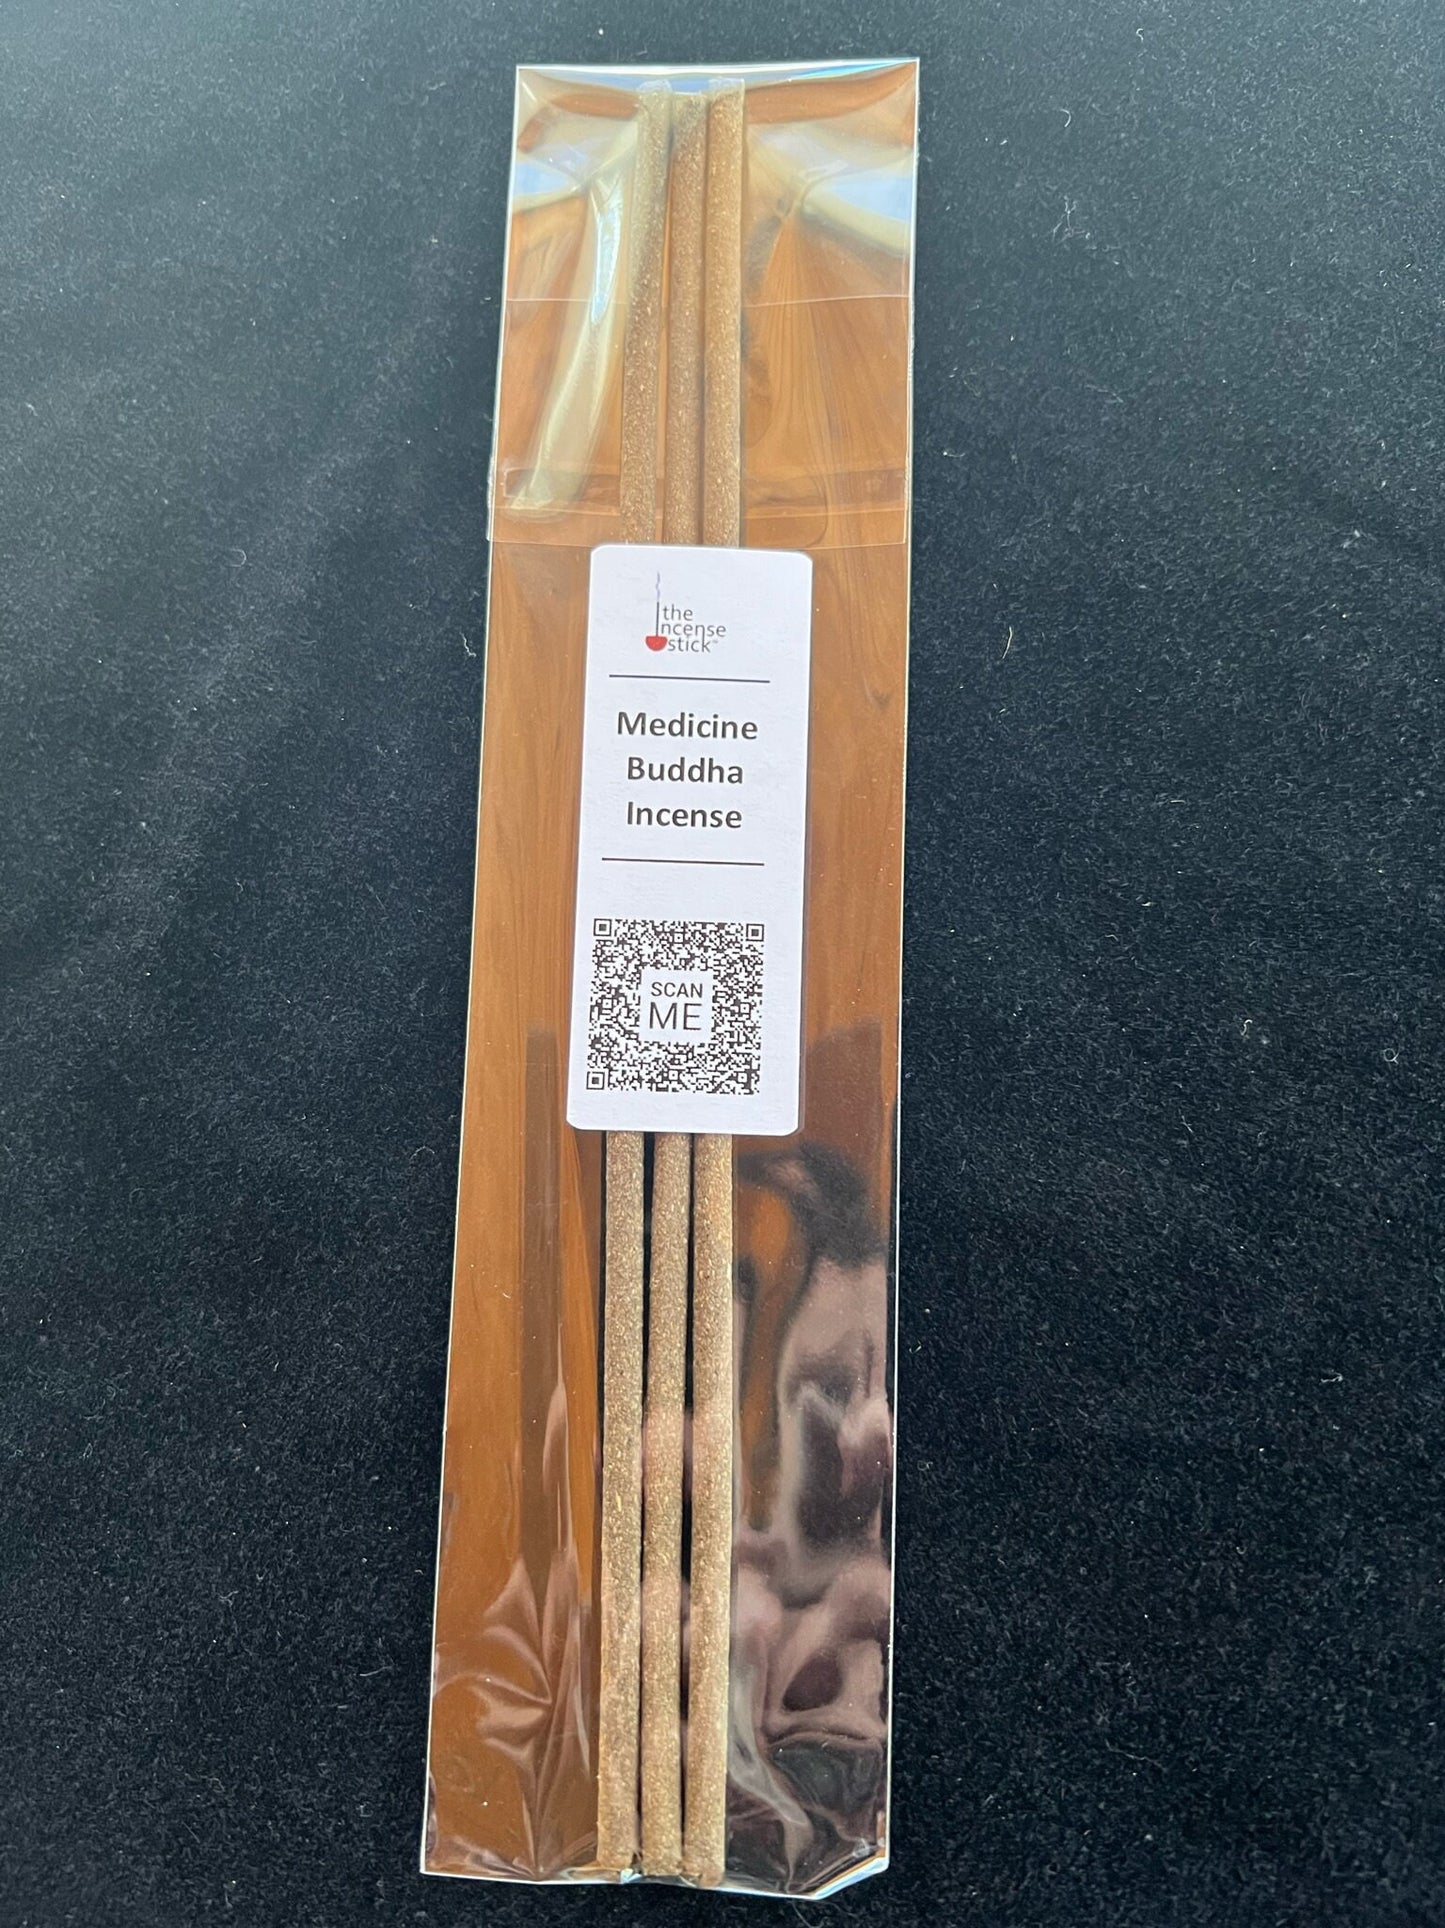 Himalayan Arts Incense Collection | Tibetan Incense | 15 sticks | Sampler with 5 varieties | 3 of each variety